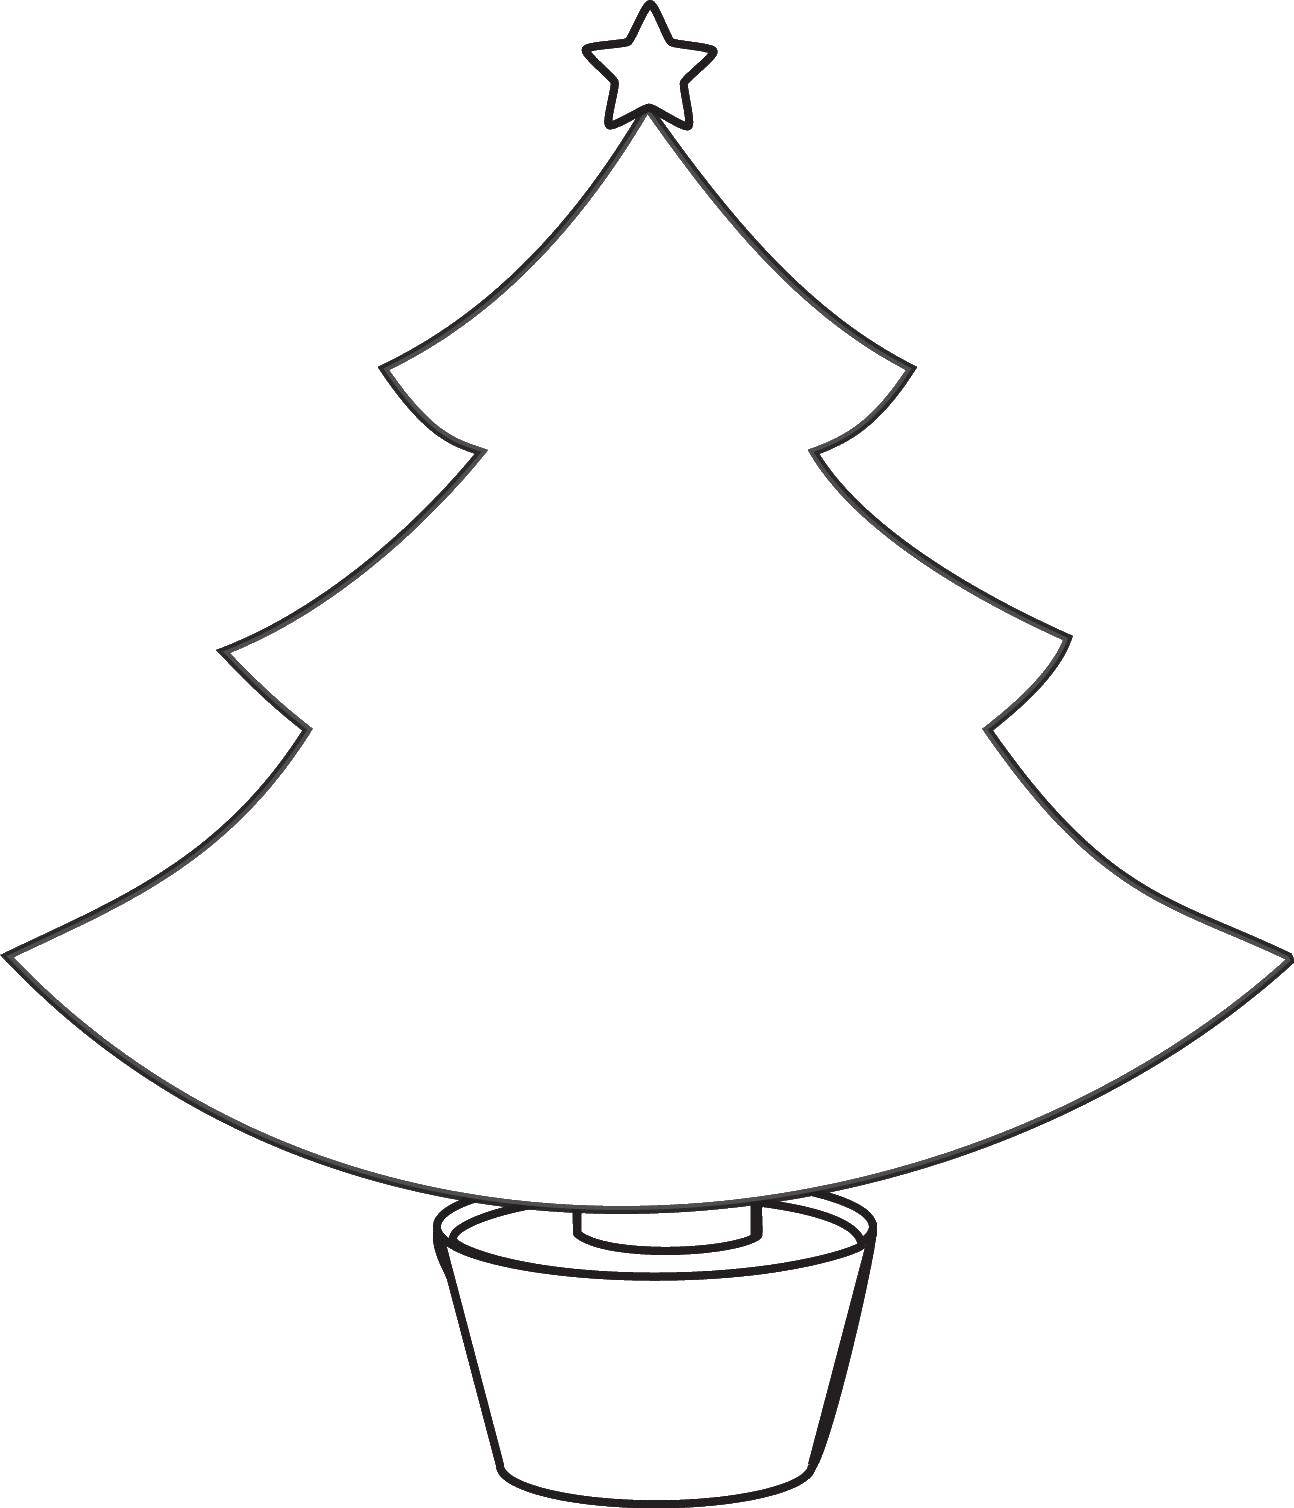 Название: Раскраска Елка со звездой. Категория: Рождество. Теги: рождество, елка, деревья.